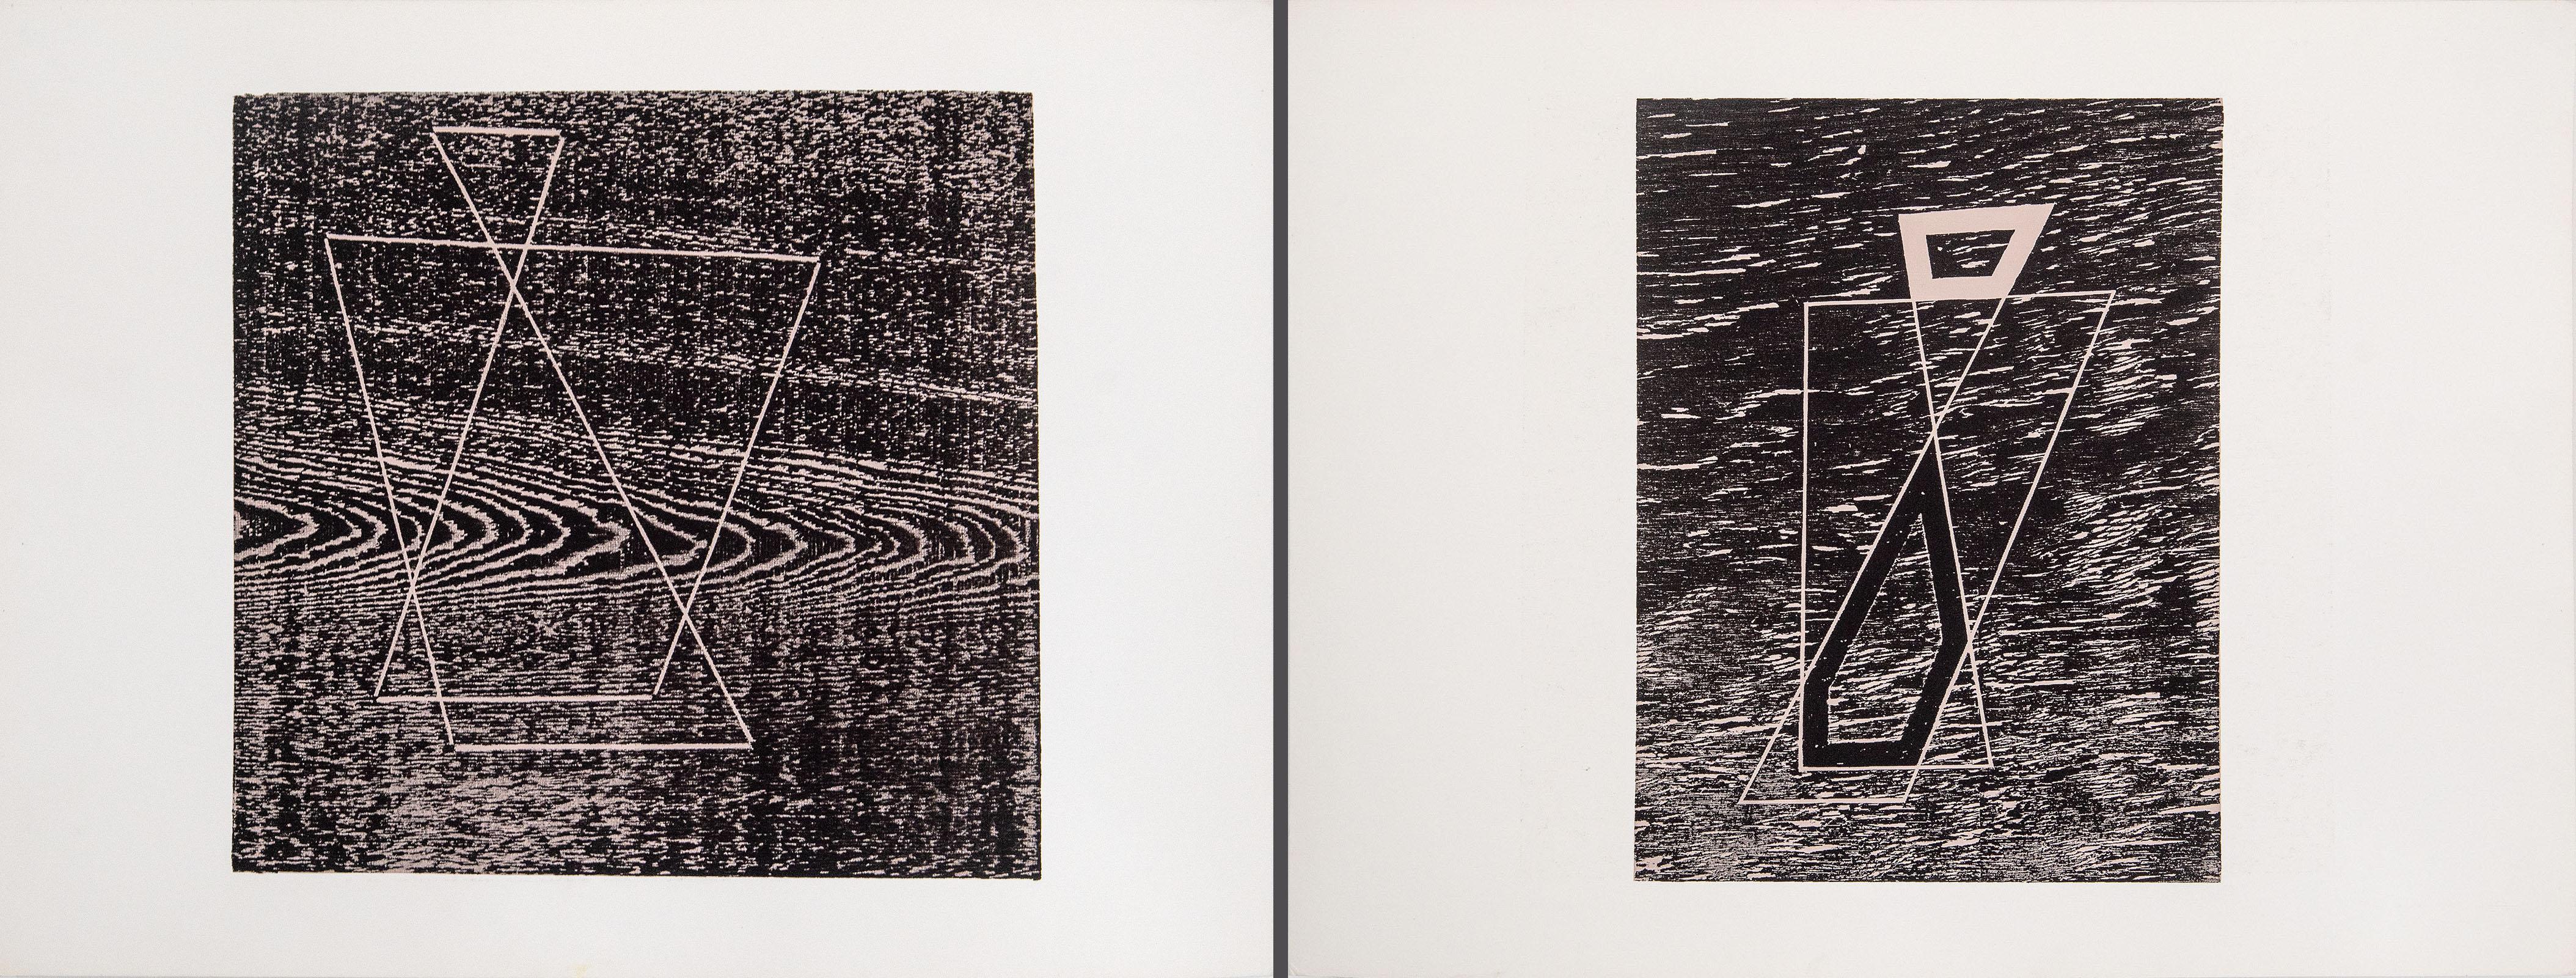 Abstract Print Josef Albers - Formulation : Articulation. Folio de 2 tirages